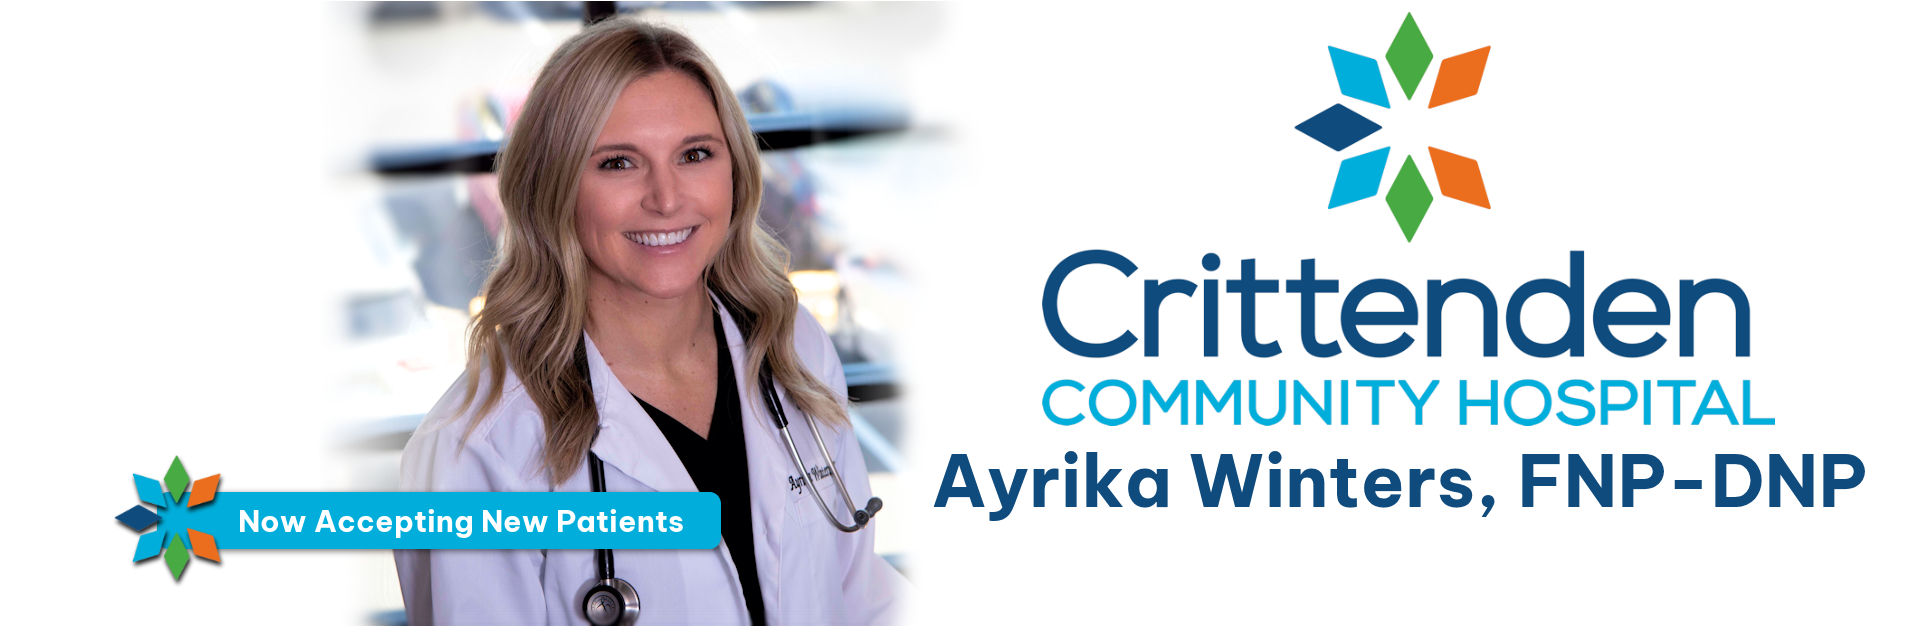 Ayrika Winters, FNP-DNP
Family Nurse Practitioner 
Meet our New Nurse Practitioner